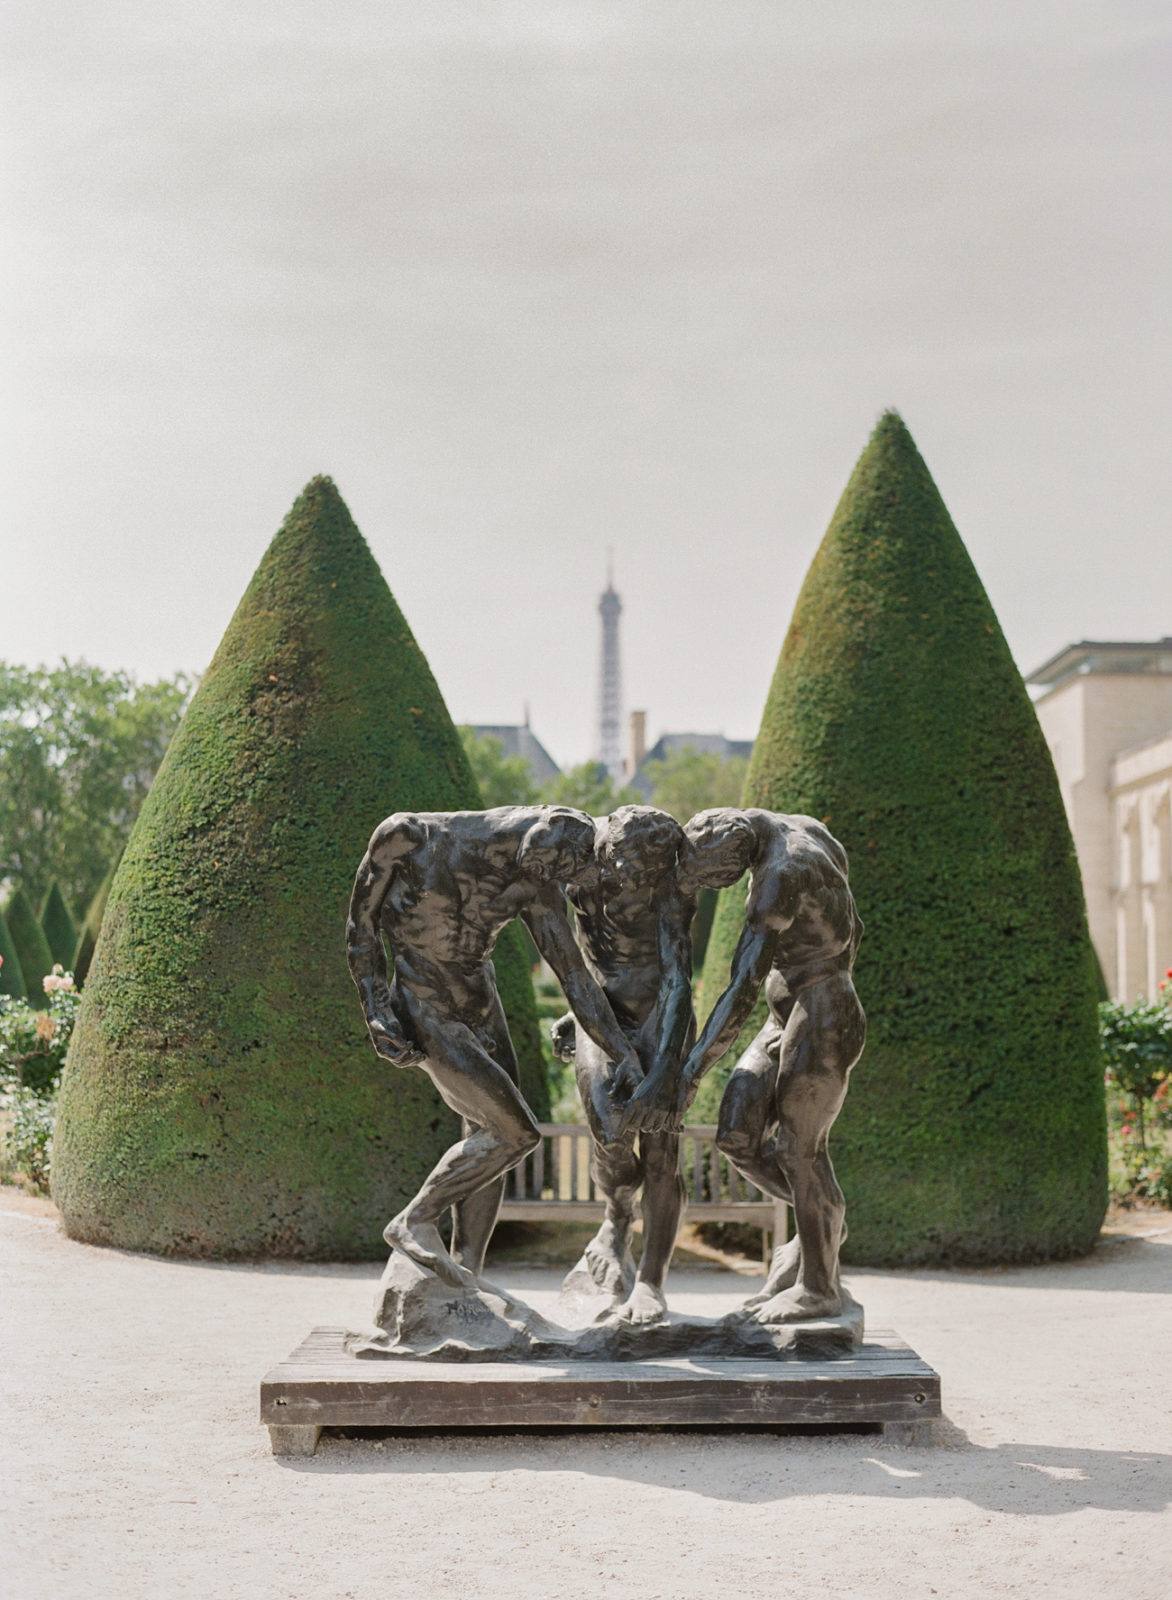 Musee Rodin Wedding Photographer | Paris Garden Wedding Photography | Paris Film Photographer | France Wedding Photography | Molly Carr Photography | Musee Rodin Gardens